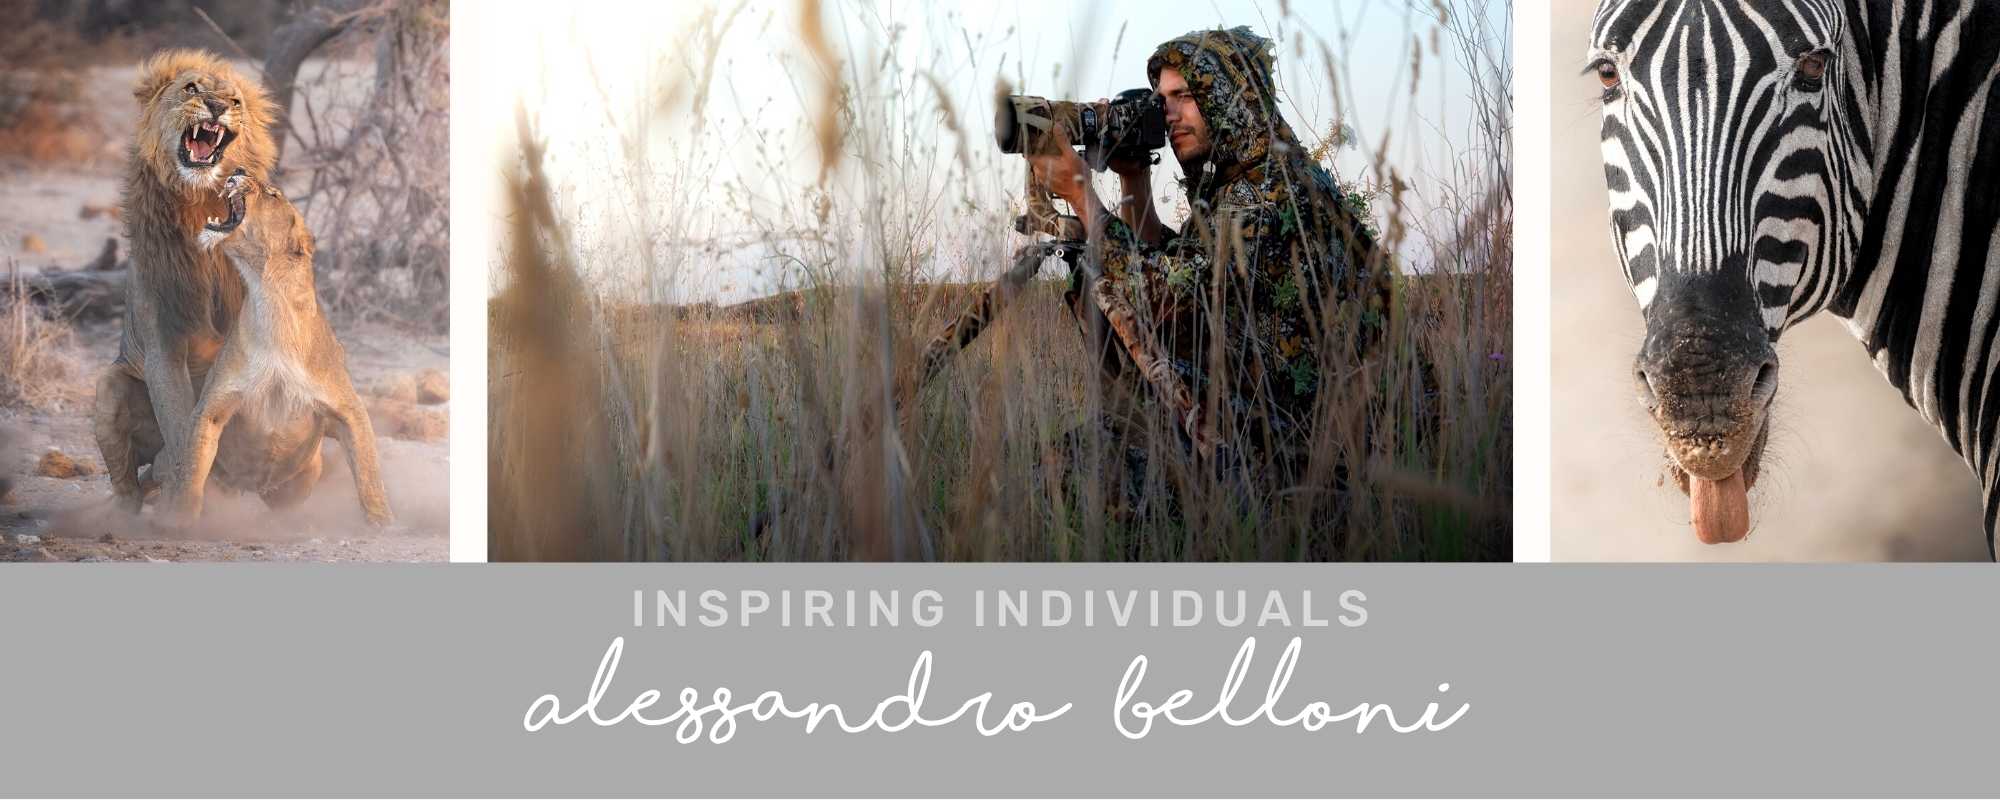 INSPIRING INDIVIDUAL: ALESSANDRO BELLONI